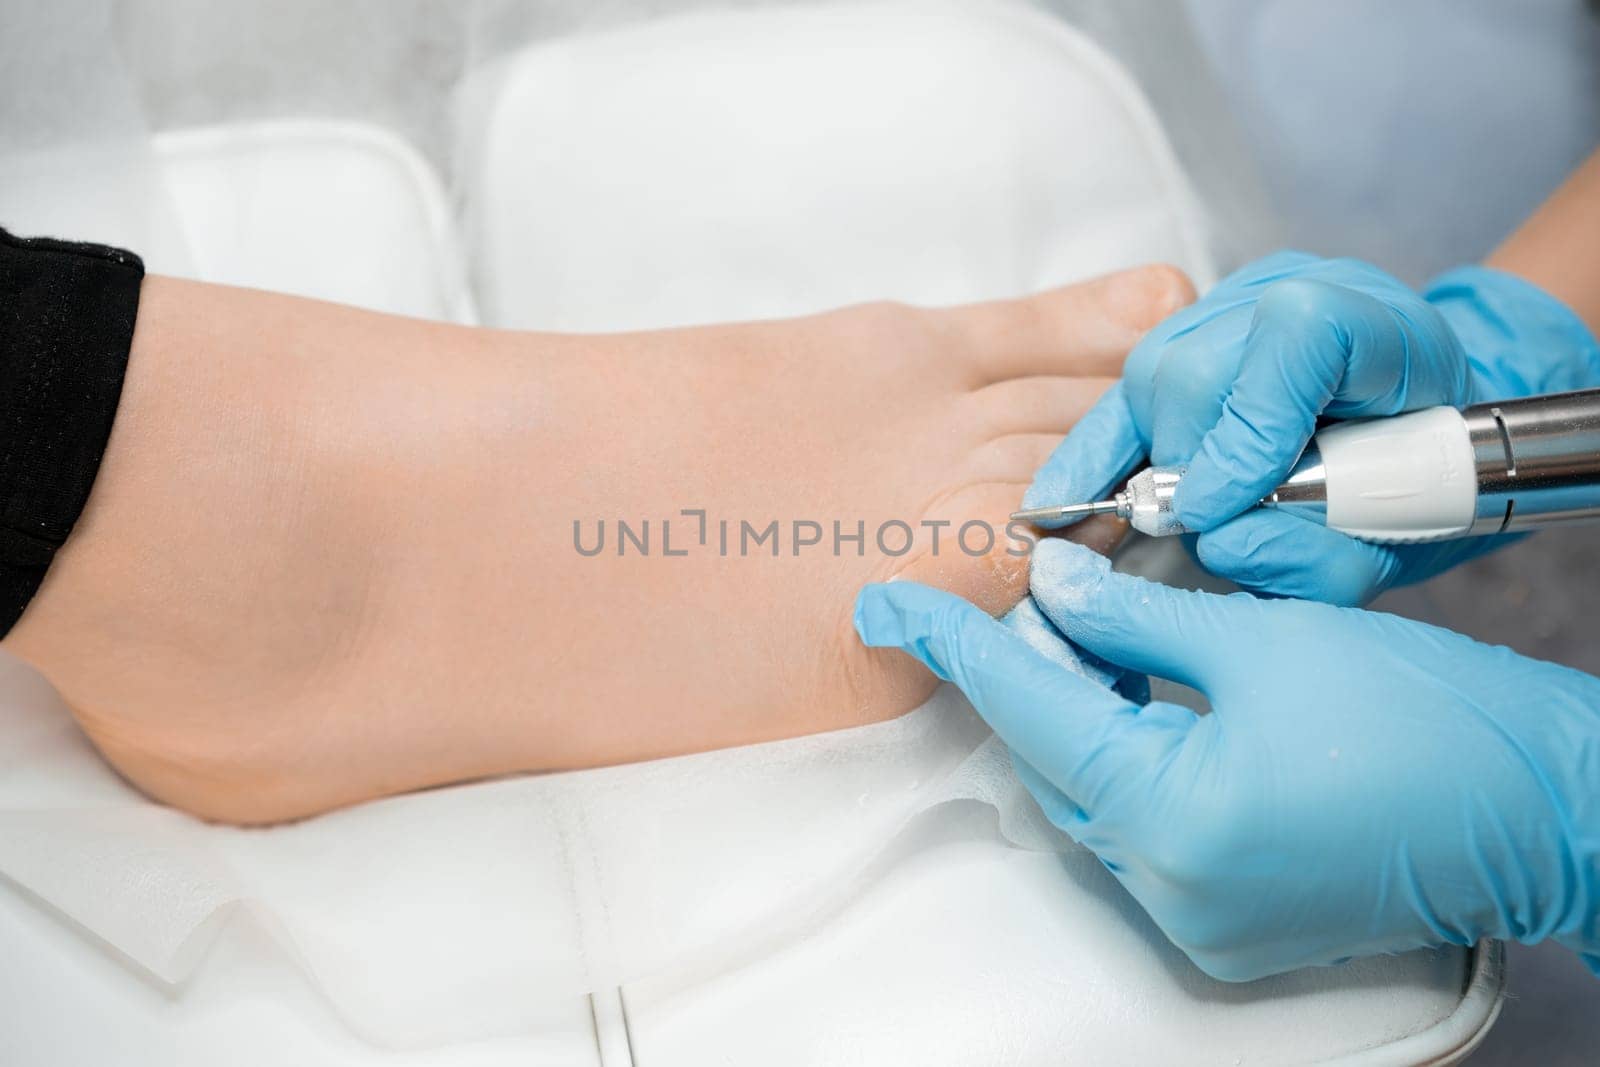 A medical pedicure session involves a podiatrist treating the toenail using a milling machine by vladimka